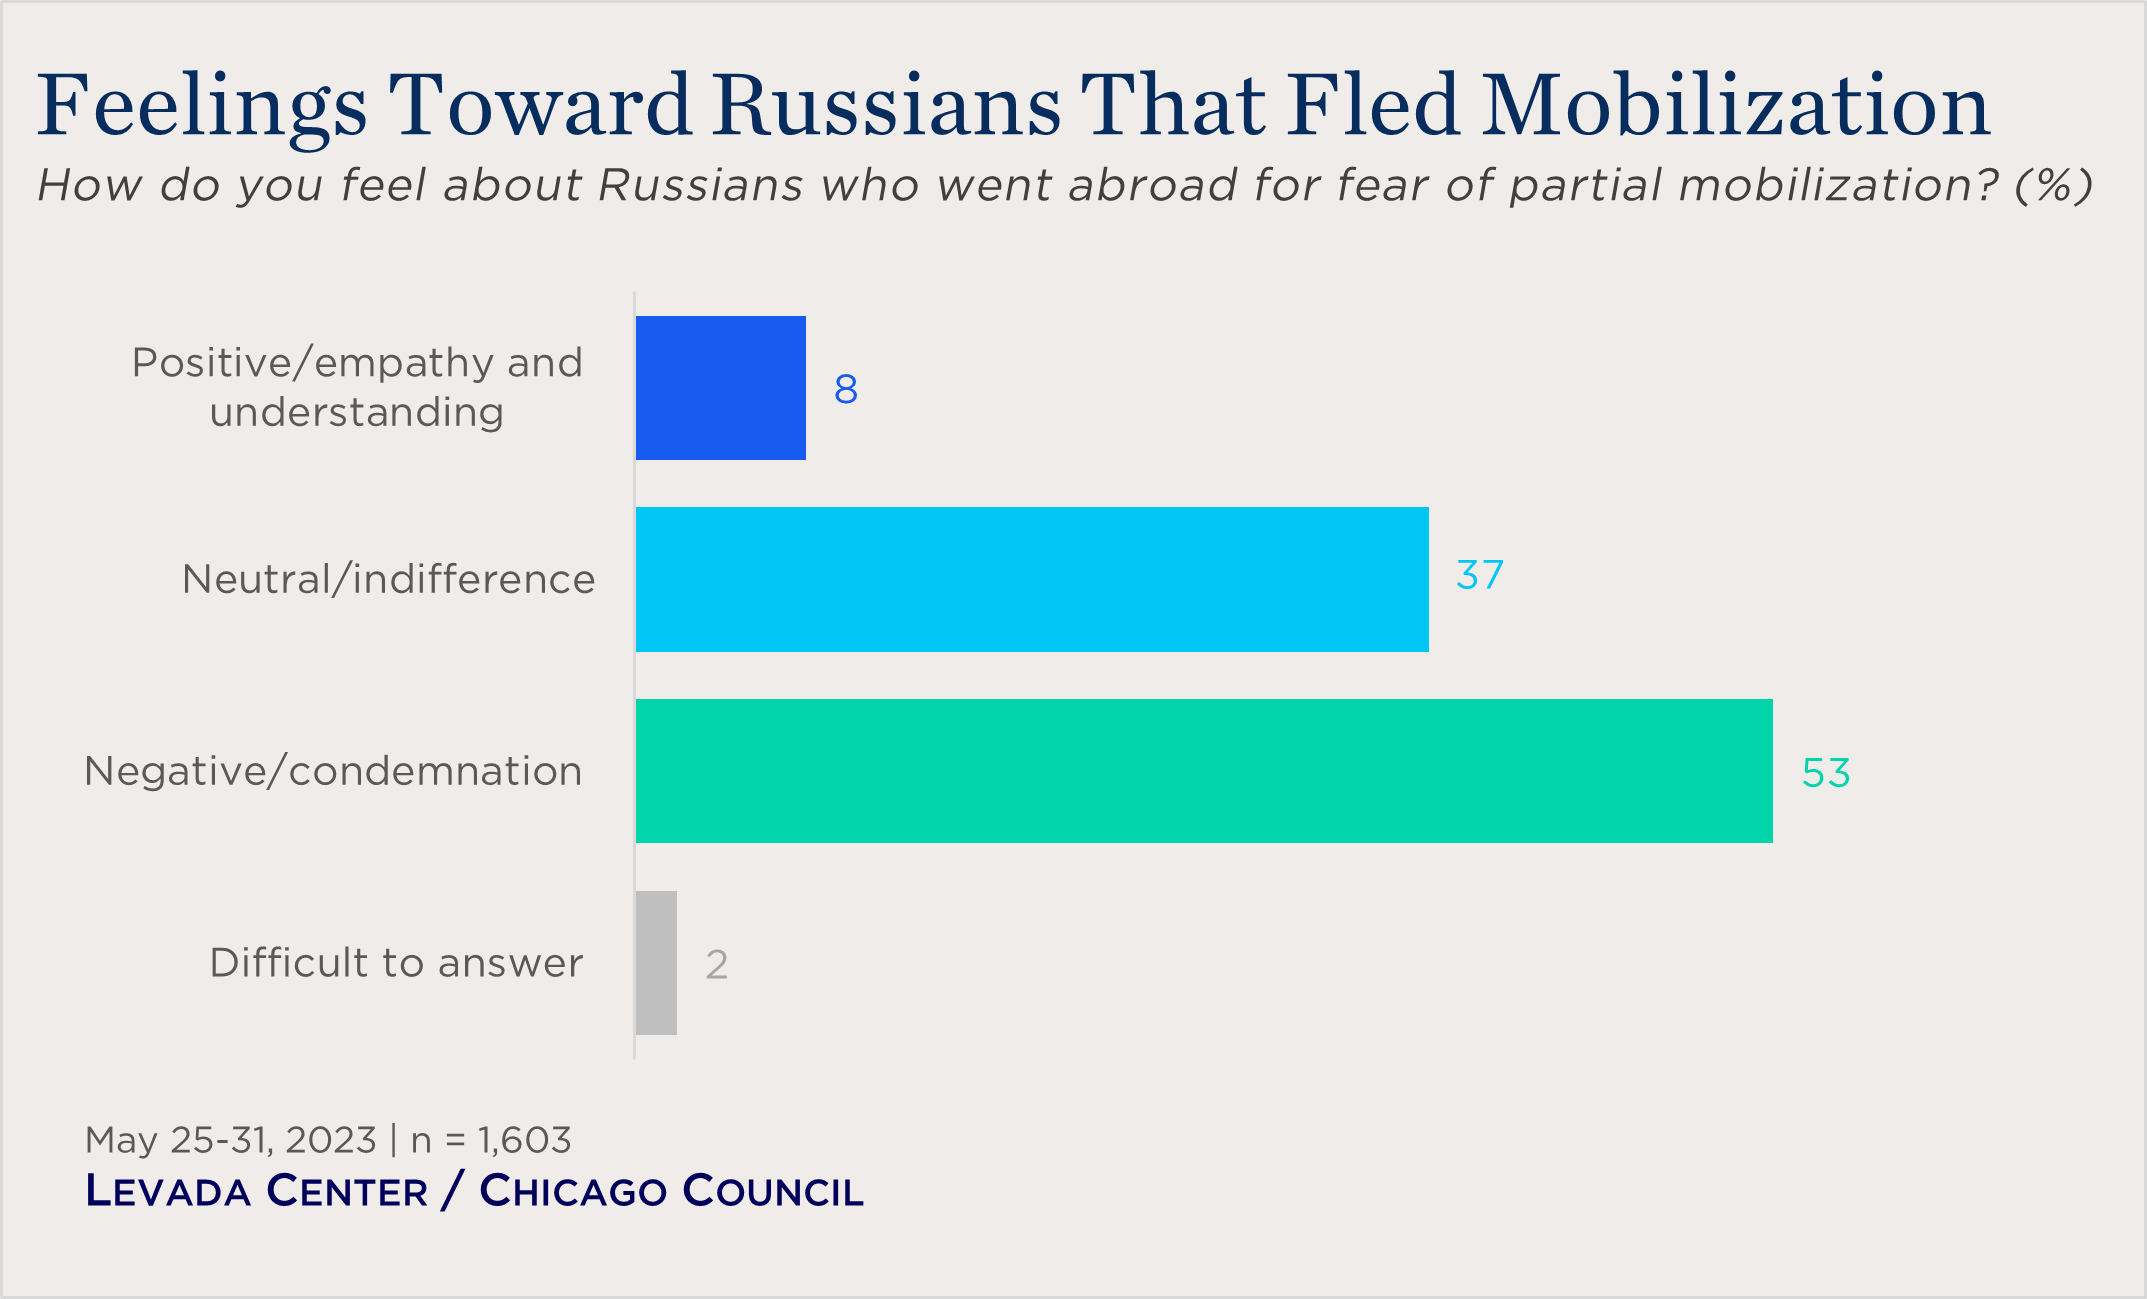 bar chart showing feelings toward Russians who fled mobilization